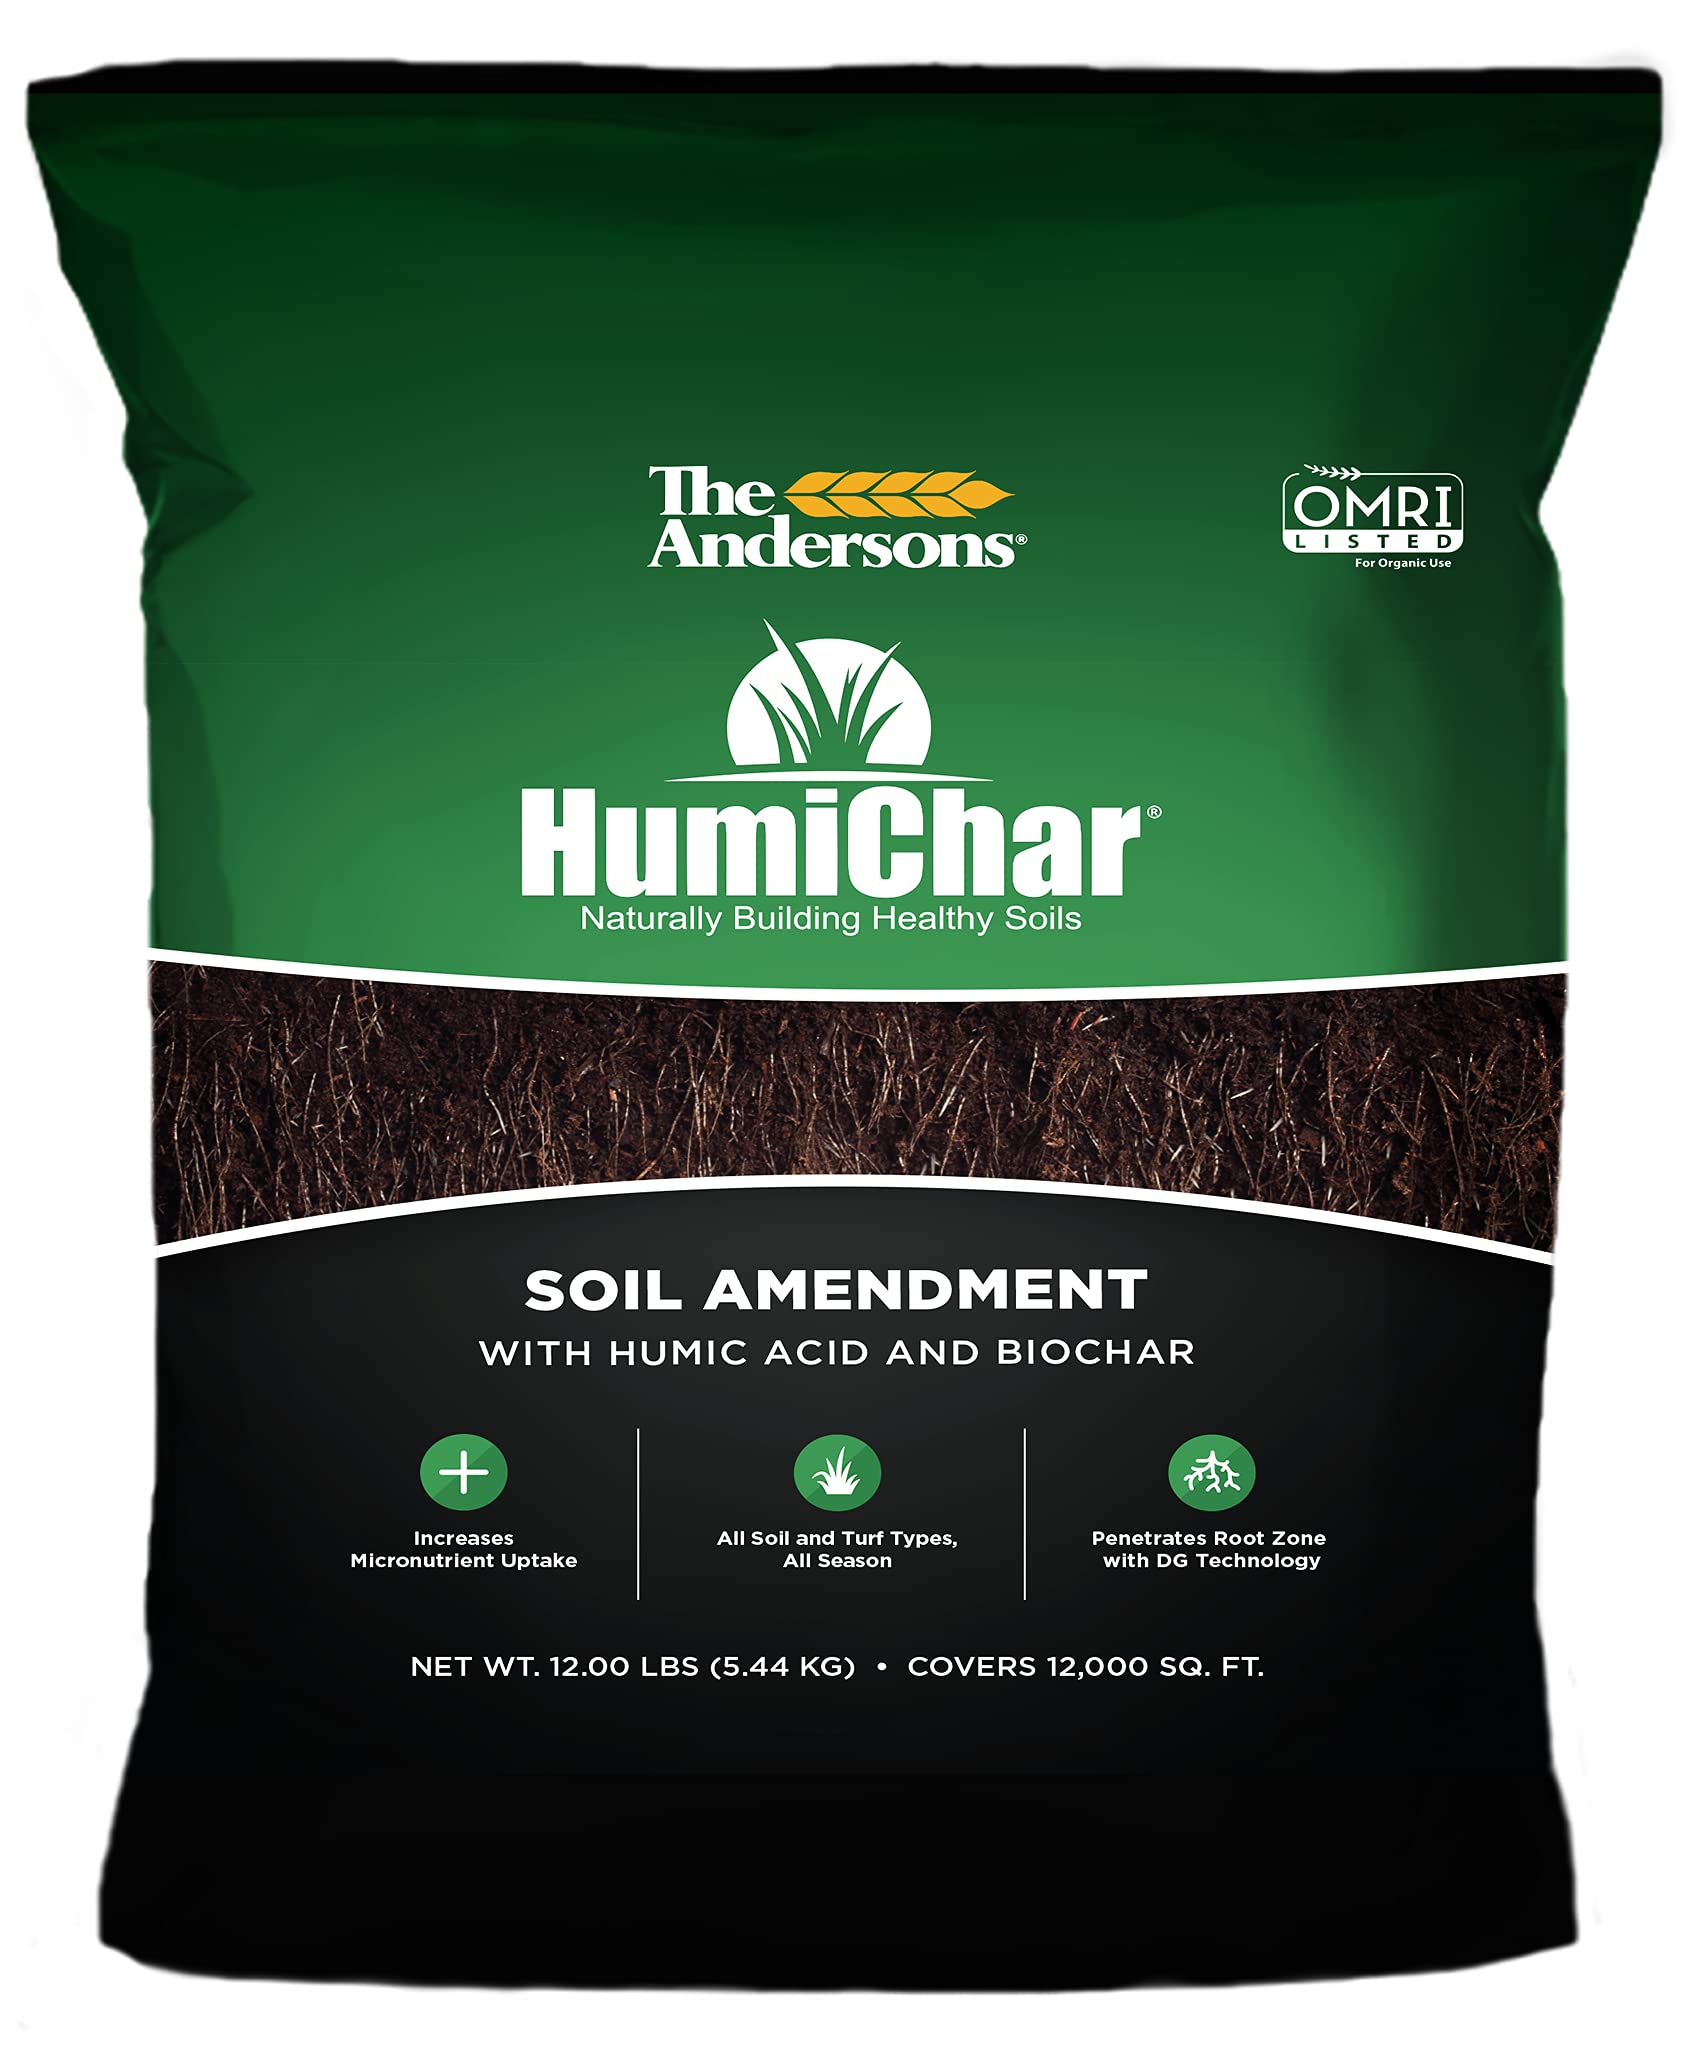 The Andersons HumiChar Organic Soil Amendment with Humic Acid and Biochar